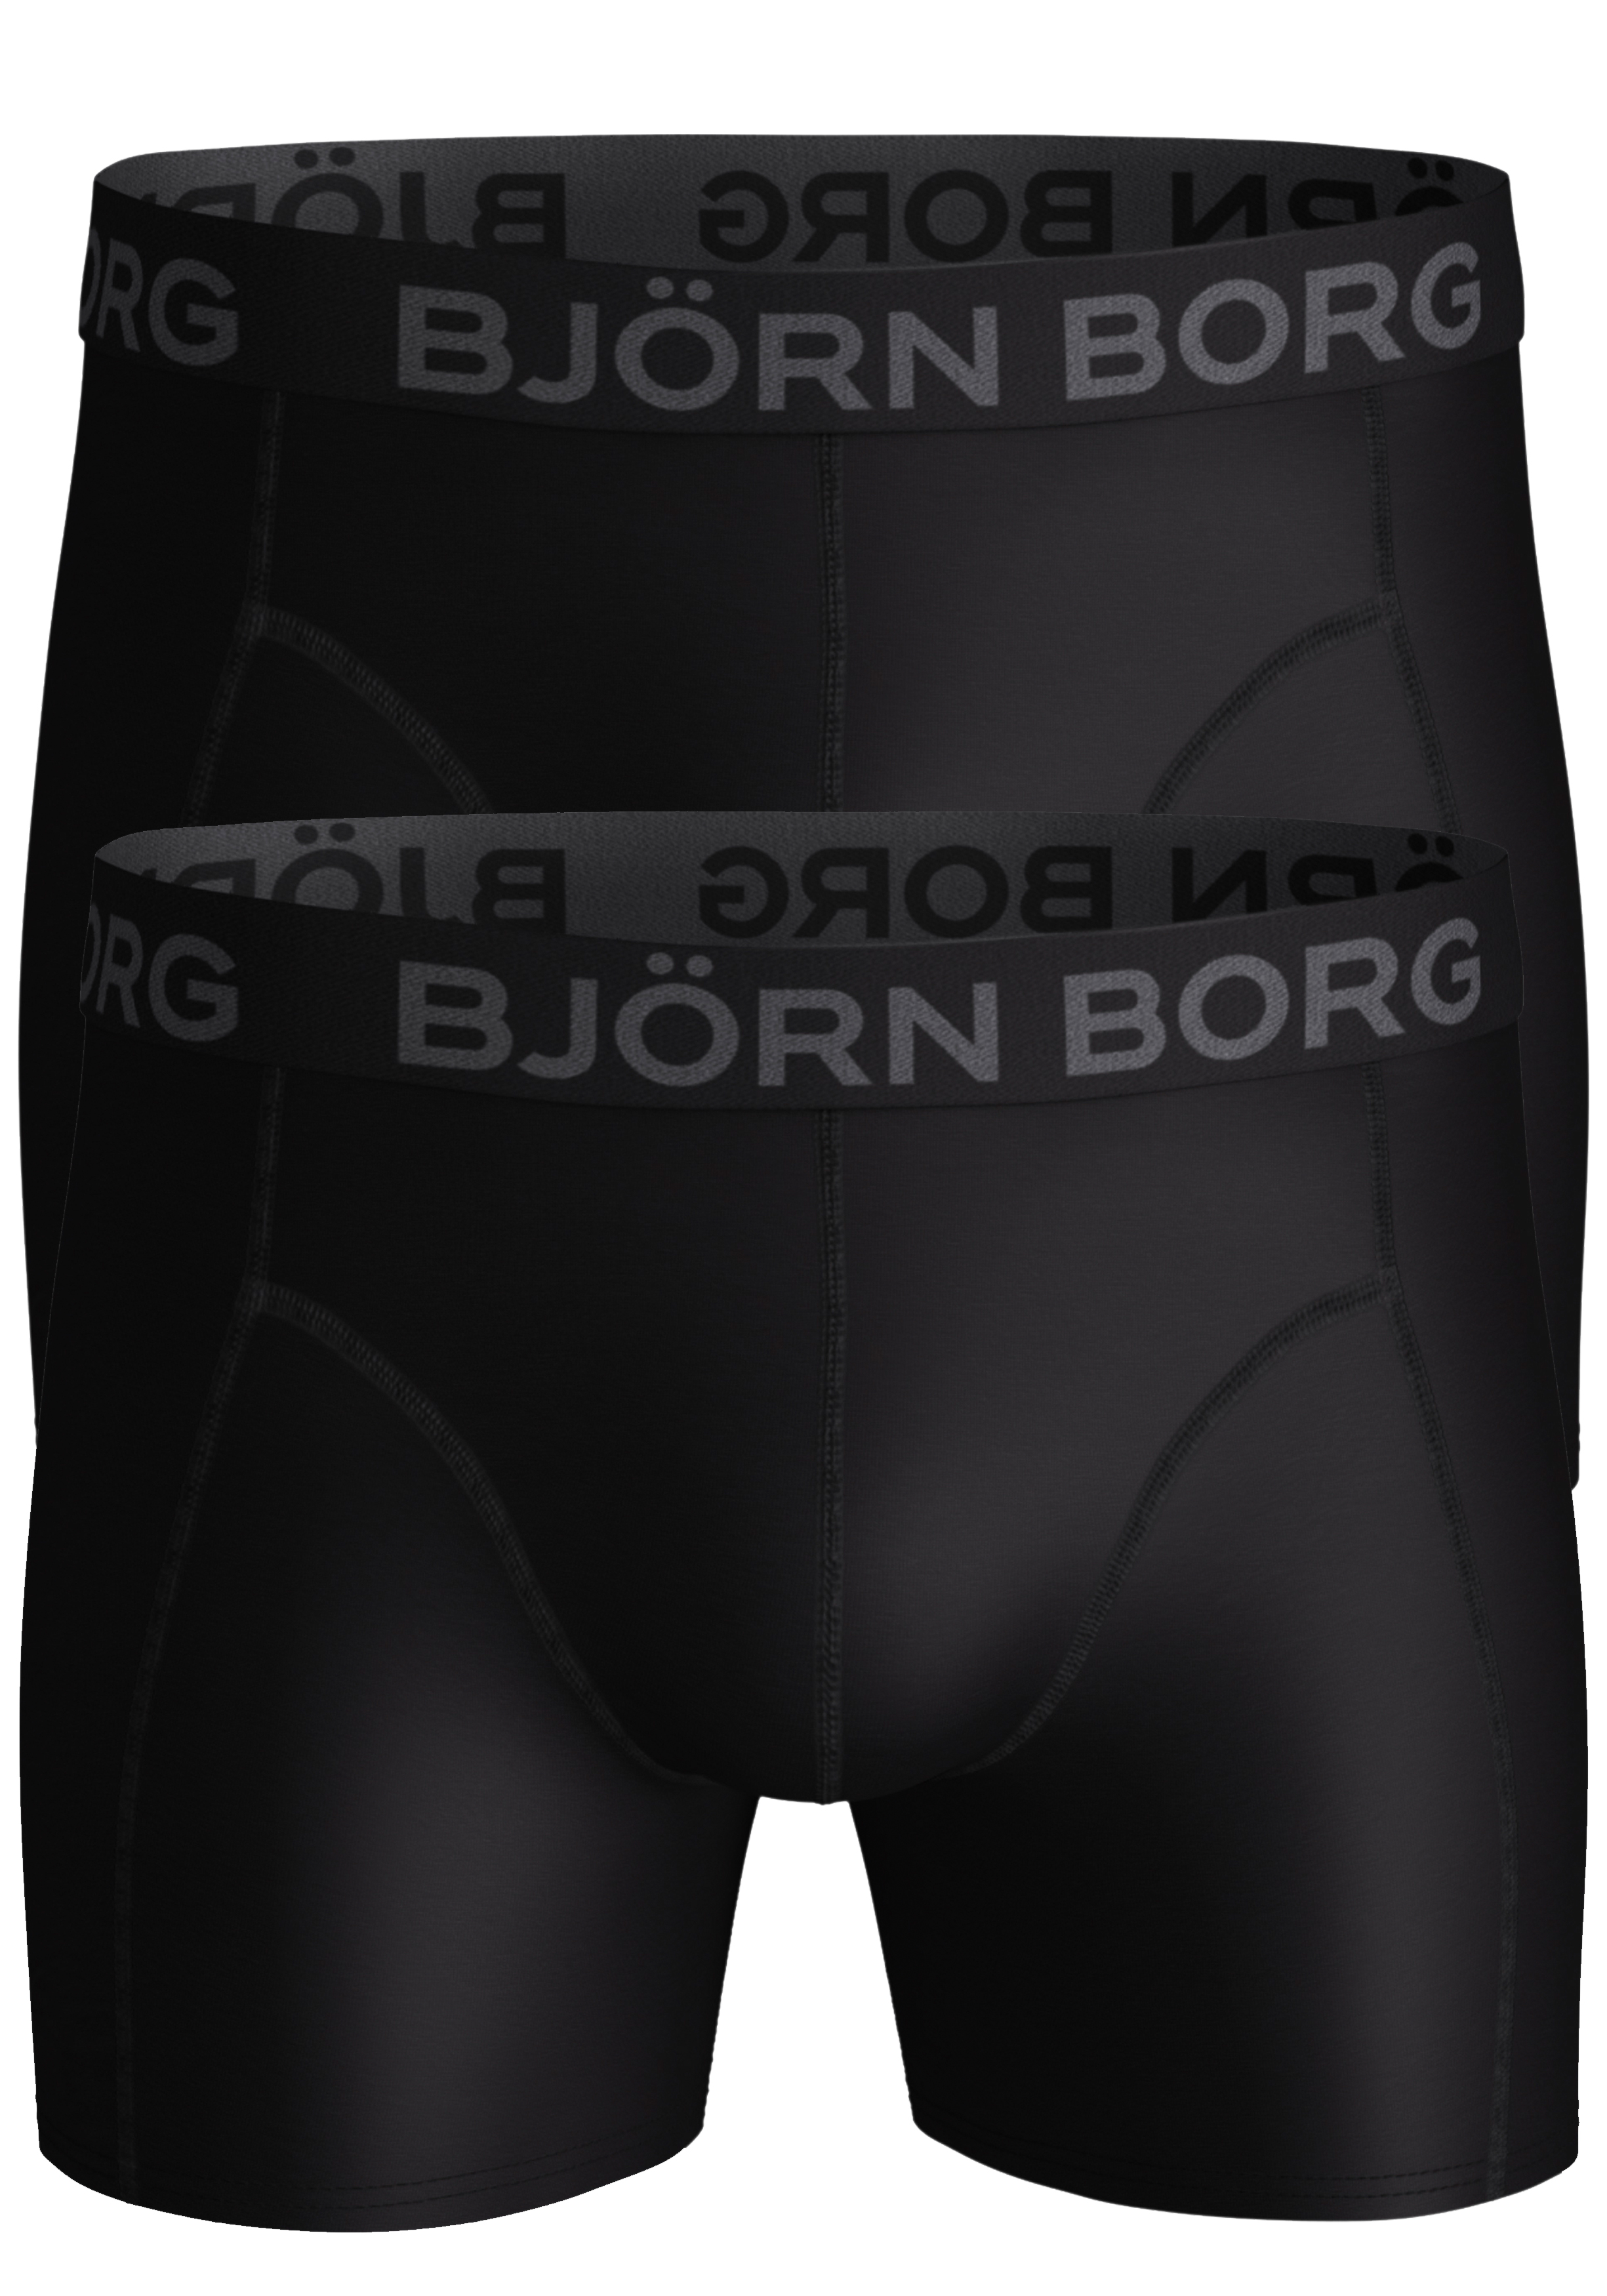 Gaan Televisie kijken Harden Björn Borg Dames Boxershorts Sale Factory Sale, 57% OFF | xevietnam.com